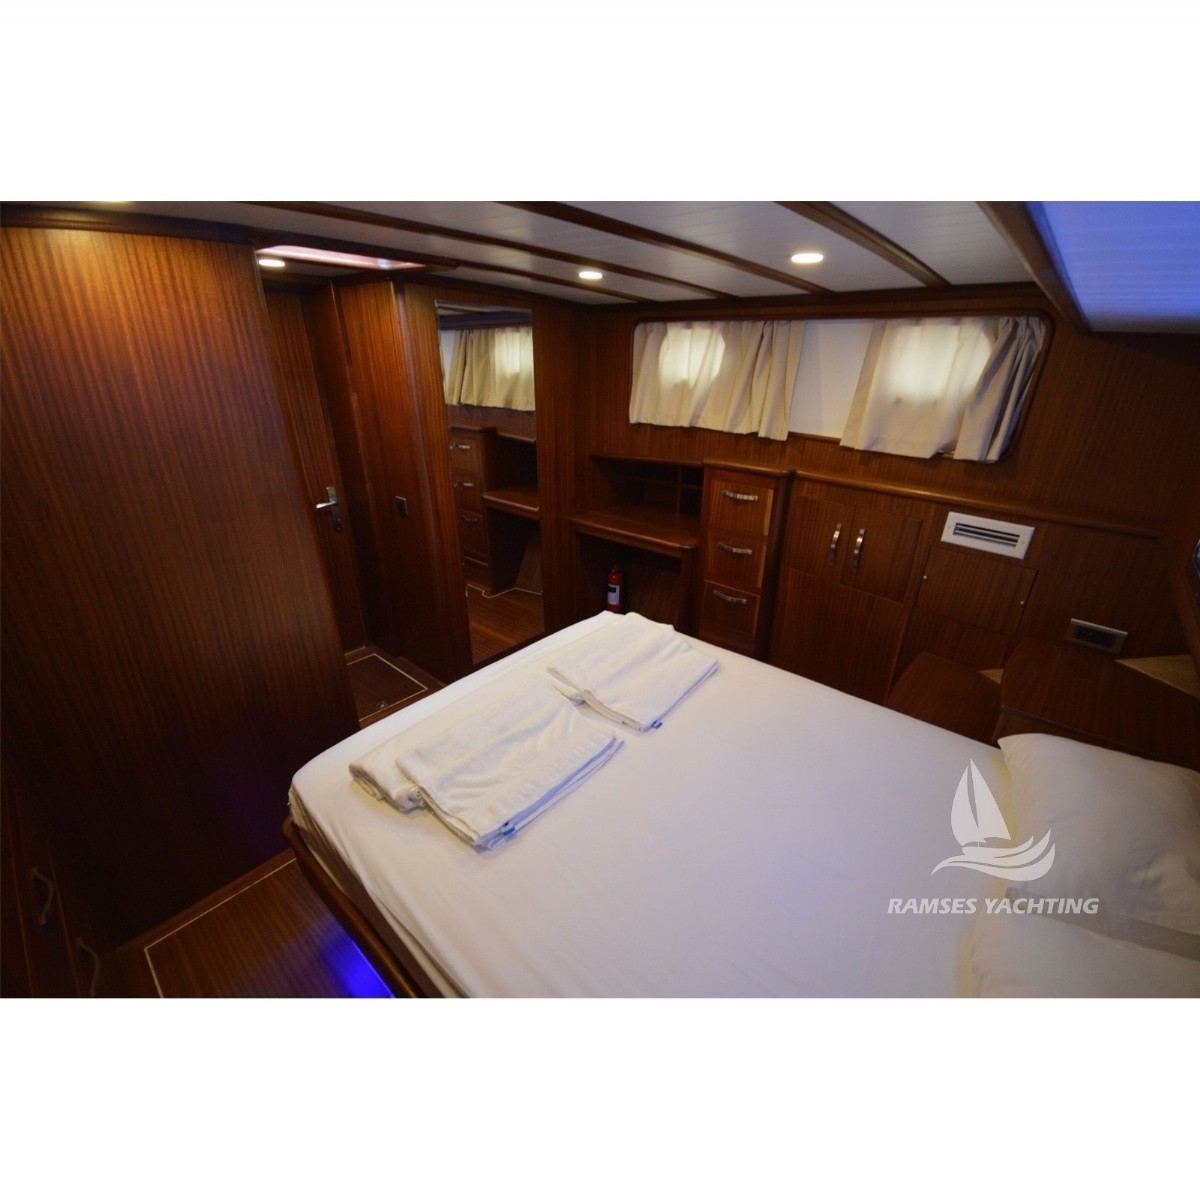 Luxury Boats | L235 - Yacht Charter Turkey 4 person Luxury Gulet | L235 | Yacht charter Turkey,Gulet charter, YachtingTurkey, gulet Turkey, cabin charter , yachtrentalsTurkey, boat charter Turkey, Bodrum yacht charter,  | 